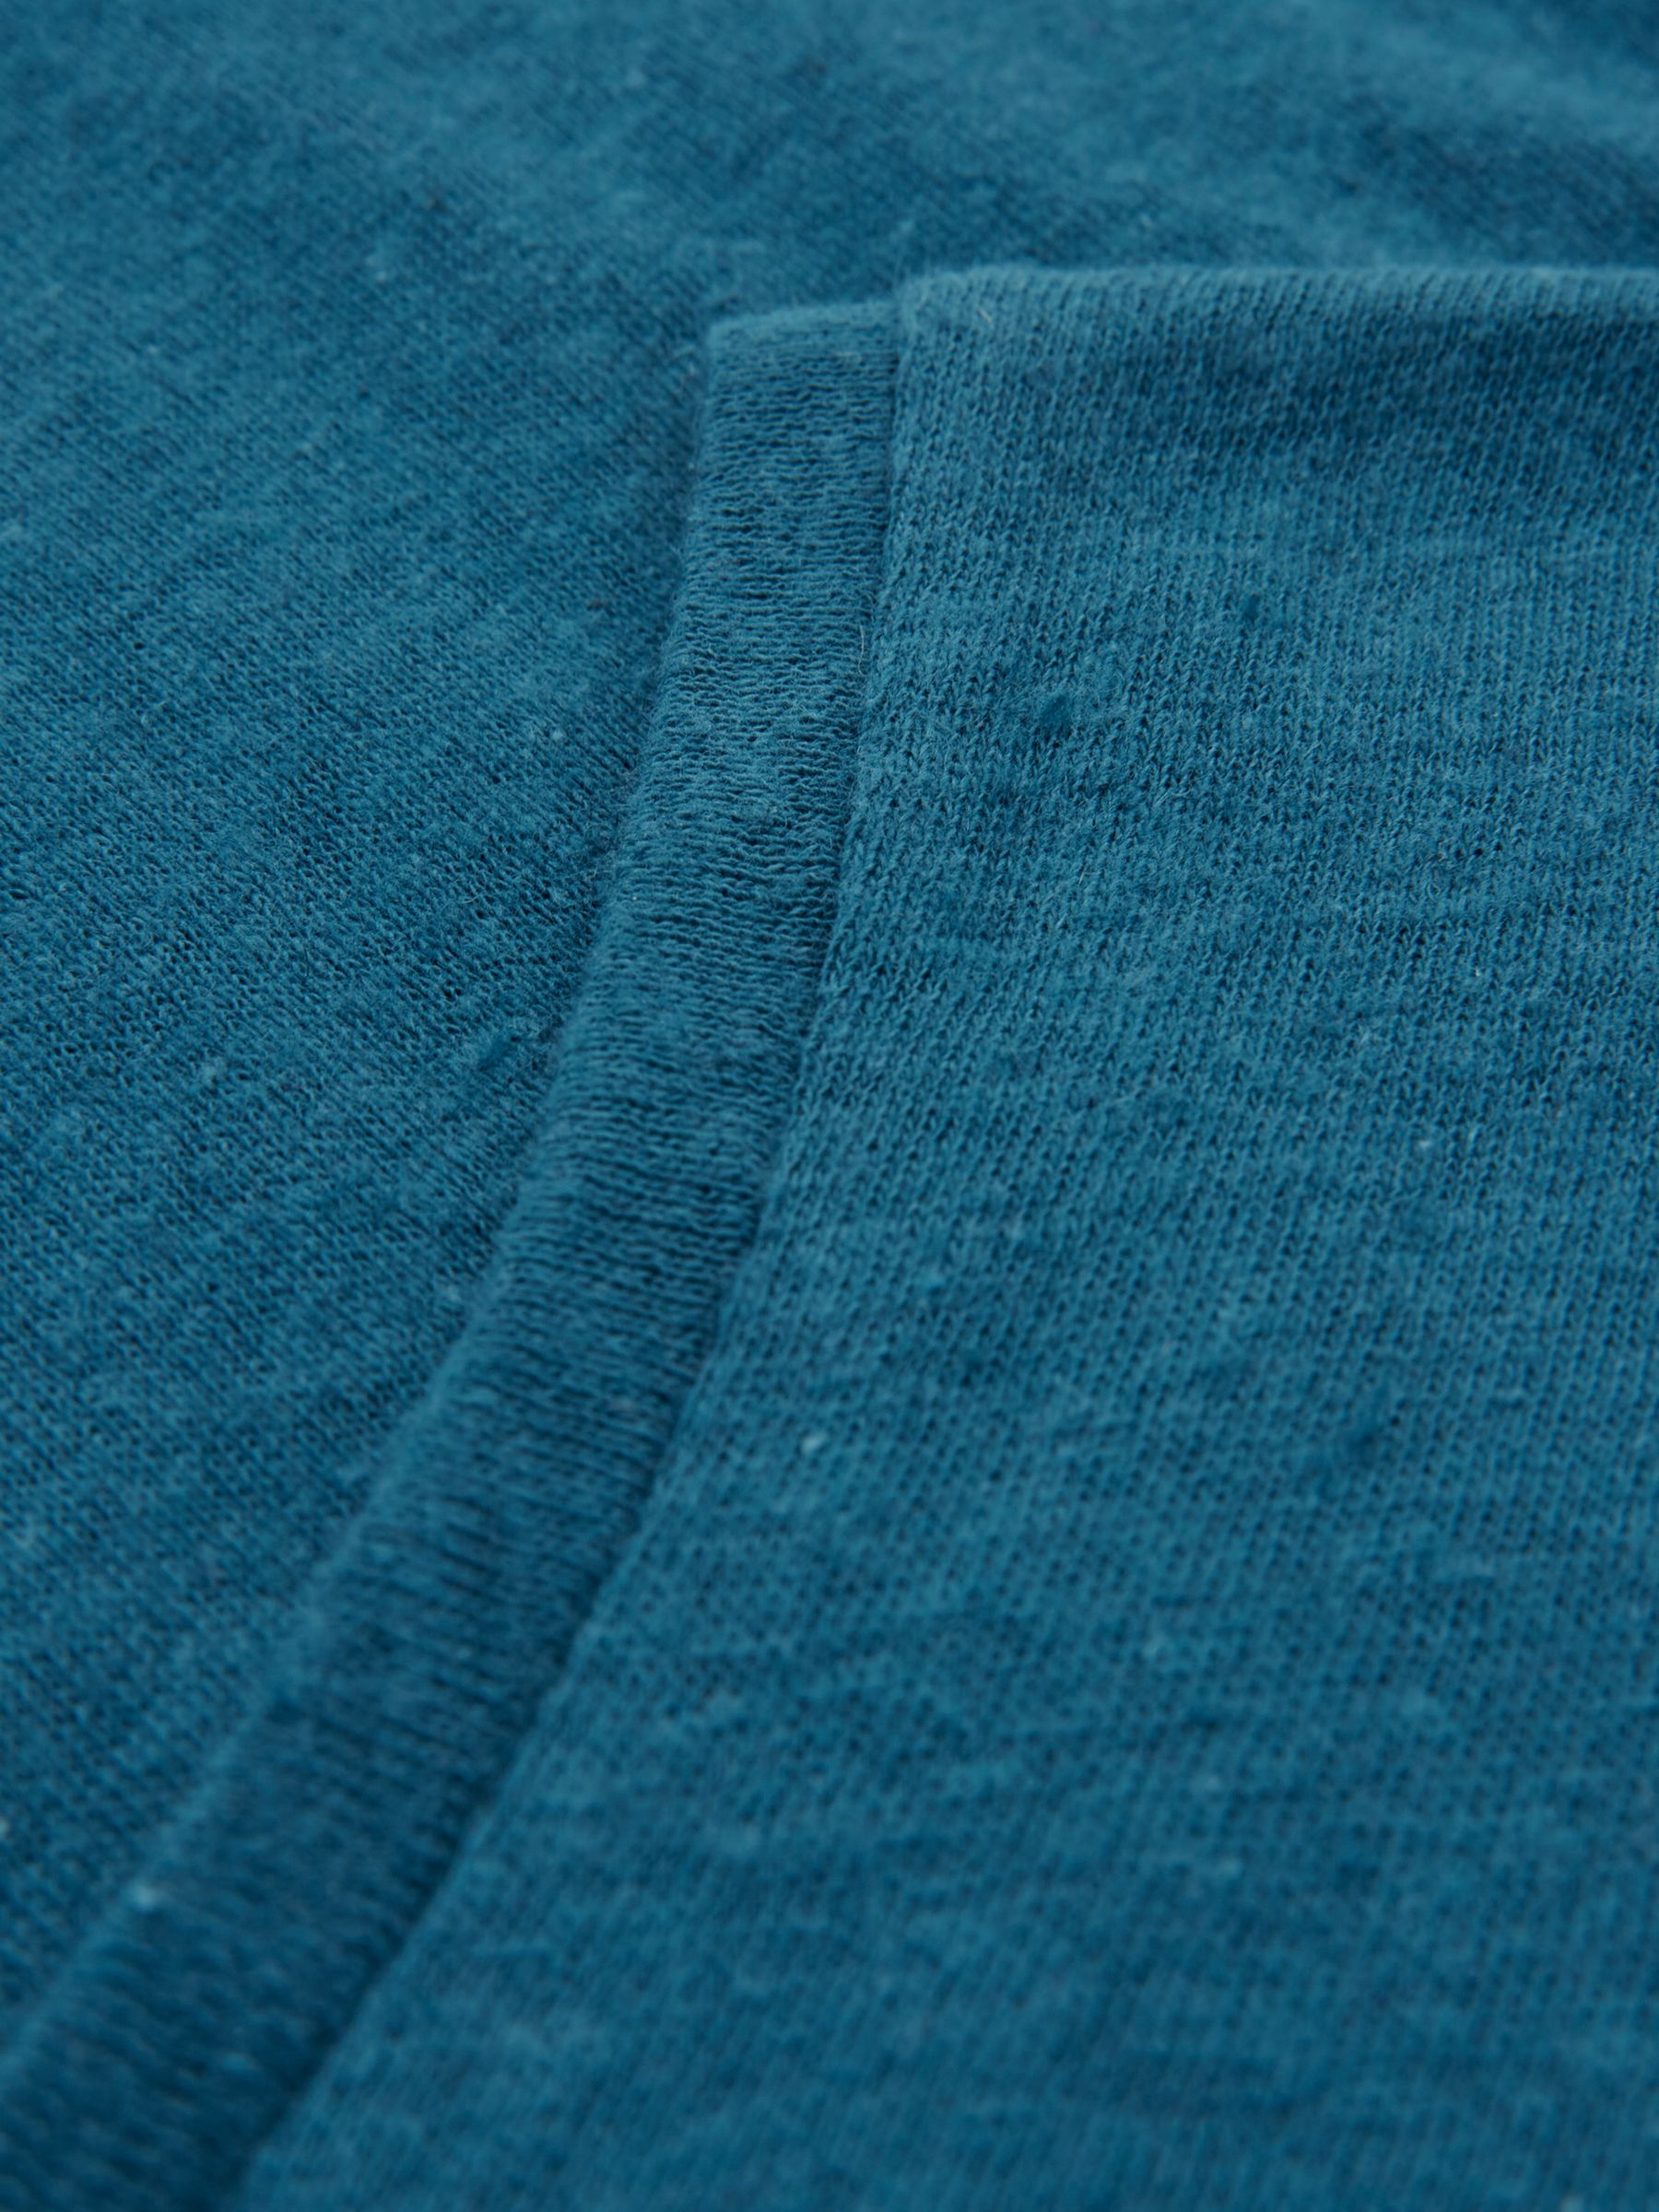 Celtic & Co. Linen & Organic Cotton Blend Tank Top, Deep Icelandic Blue, Deep Icelandic Blue, 8